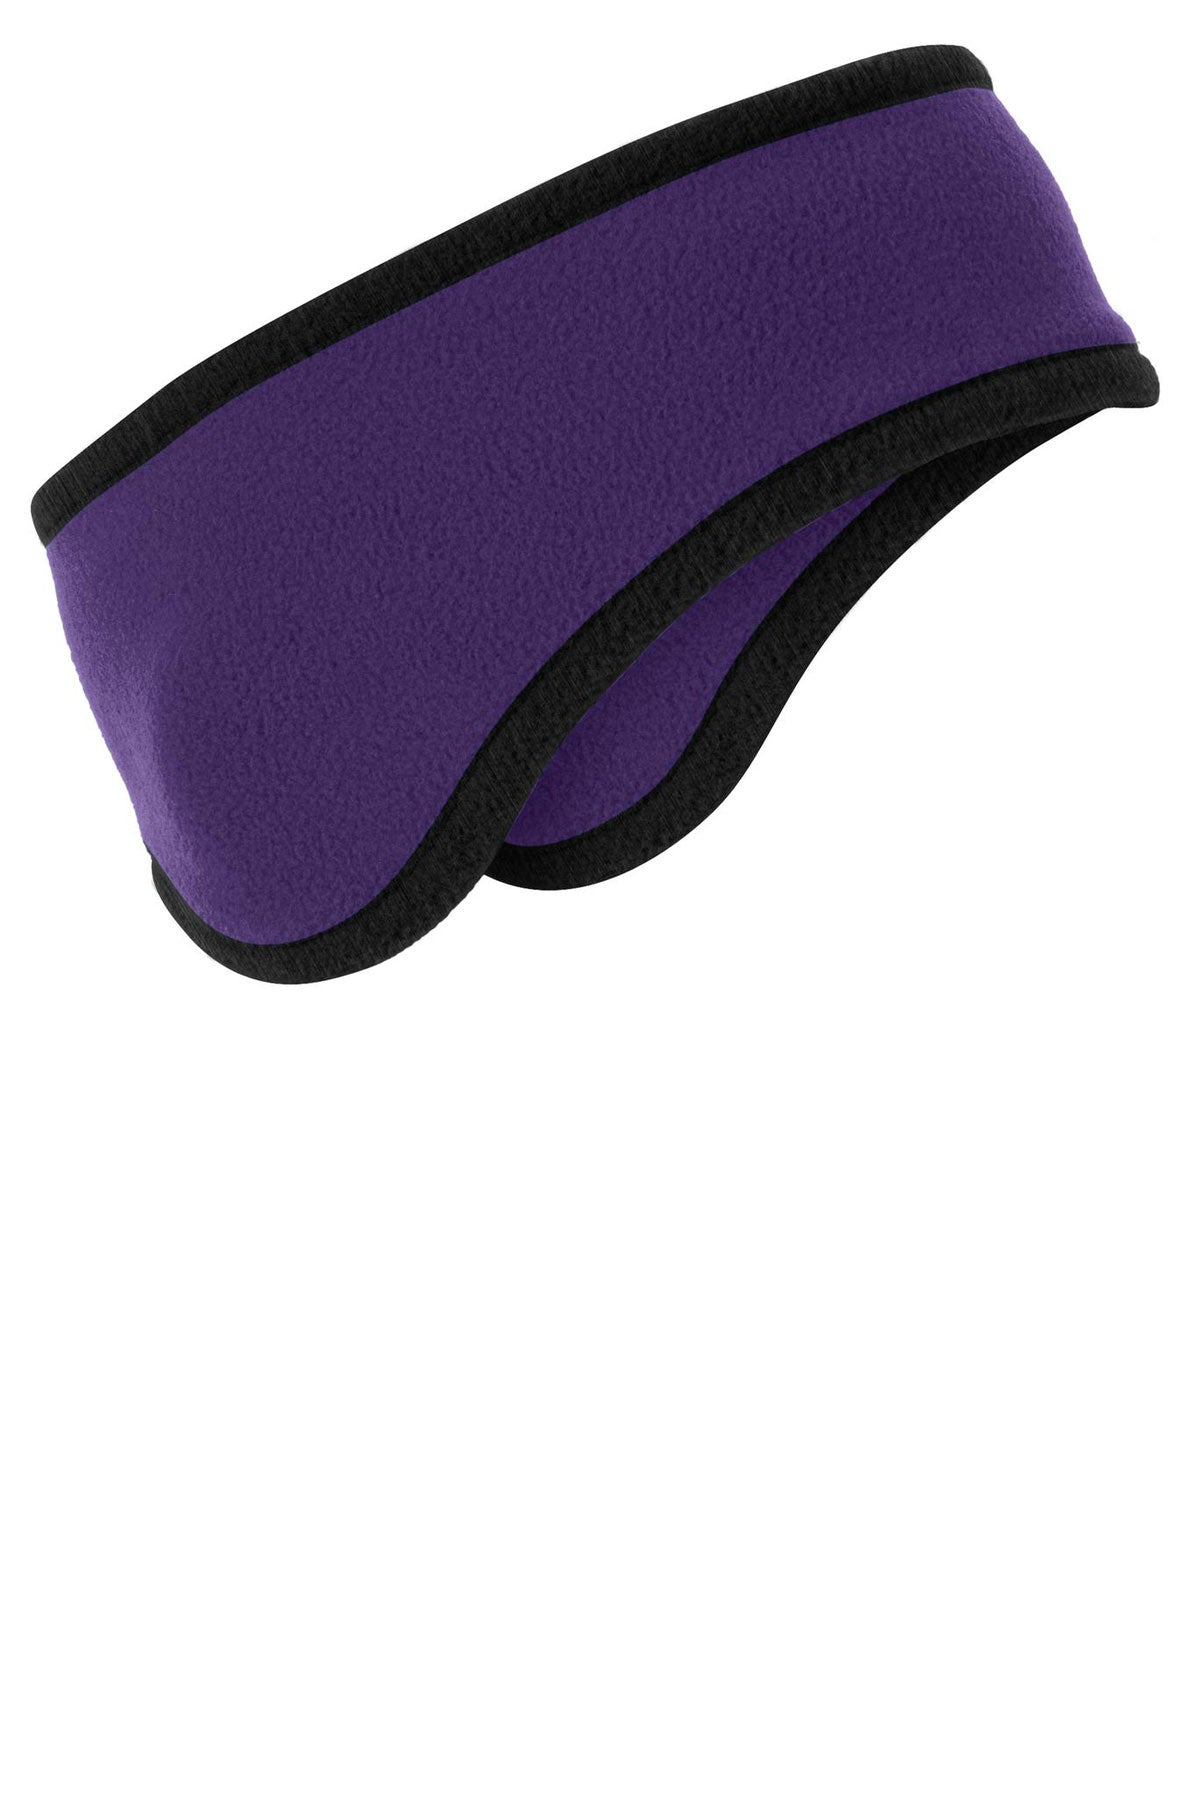 Port Authority Two-Color Fleece Customized Headbands, Purple